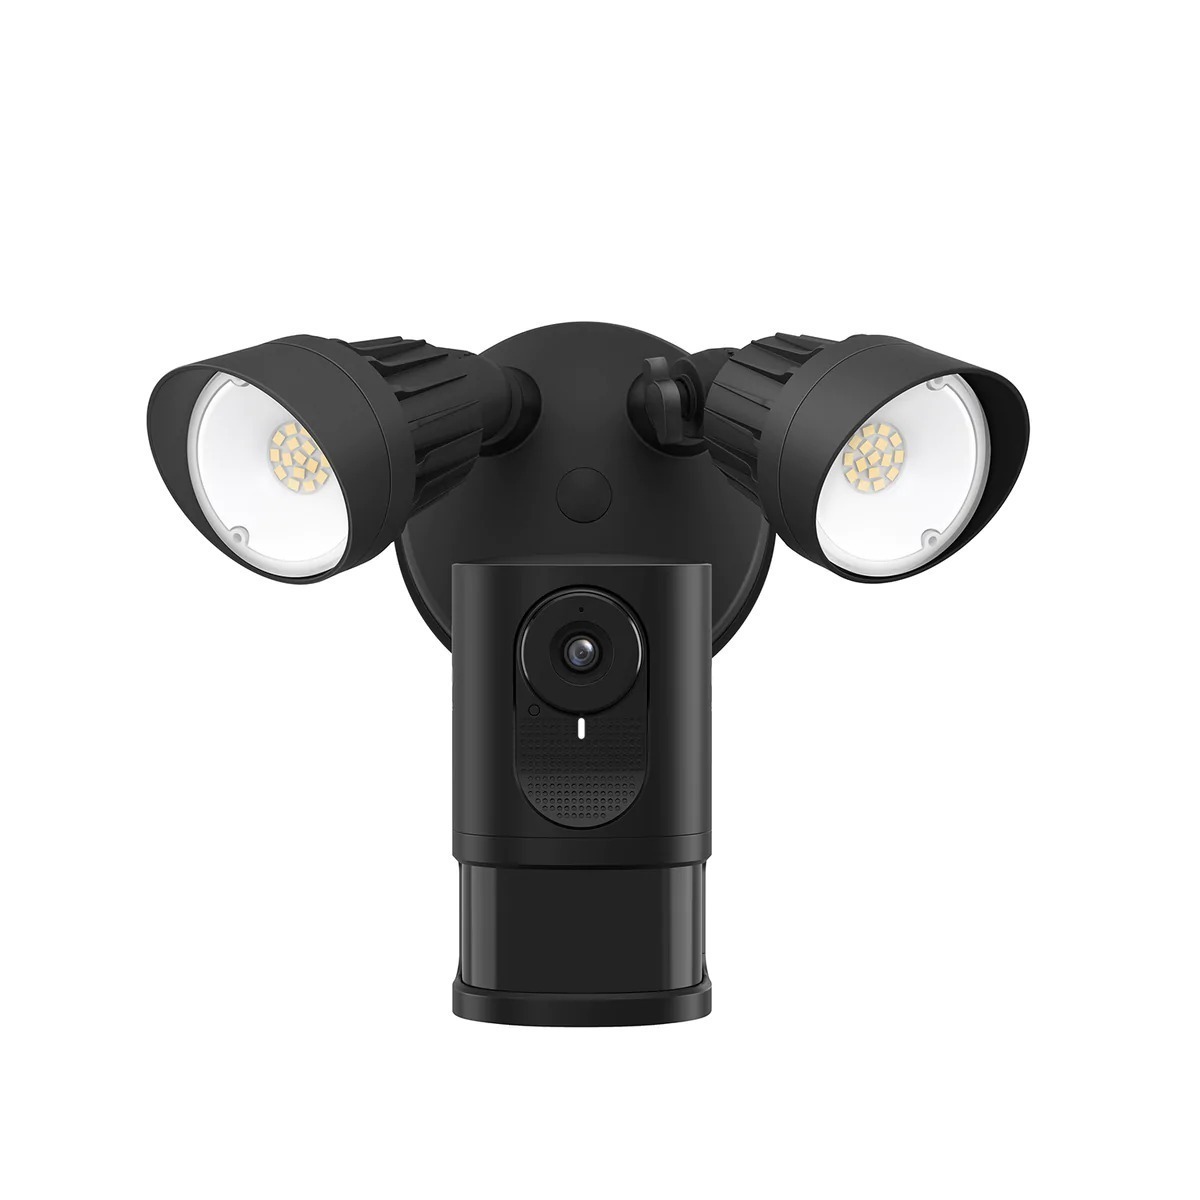 eufy Floodlight Camera (2K, Wired) $84.99 + Free shipping